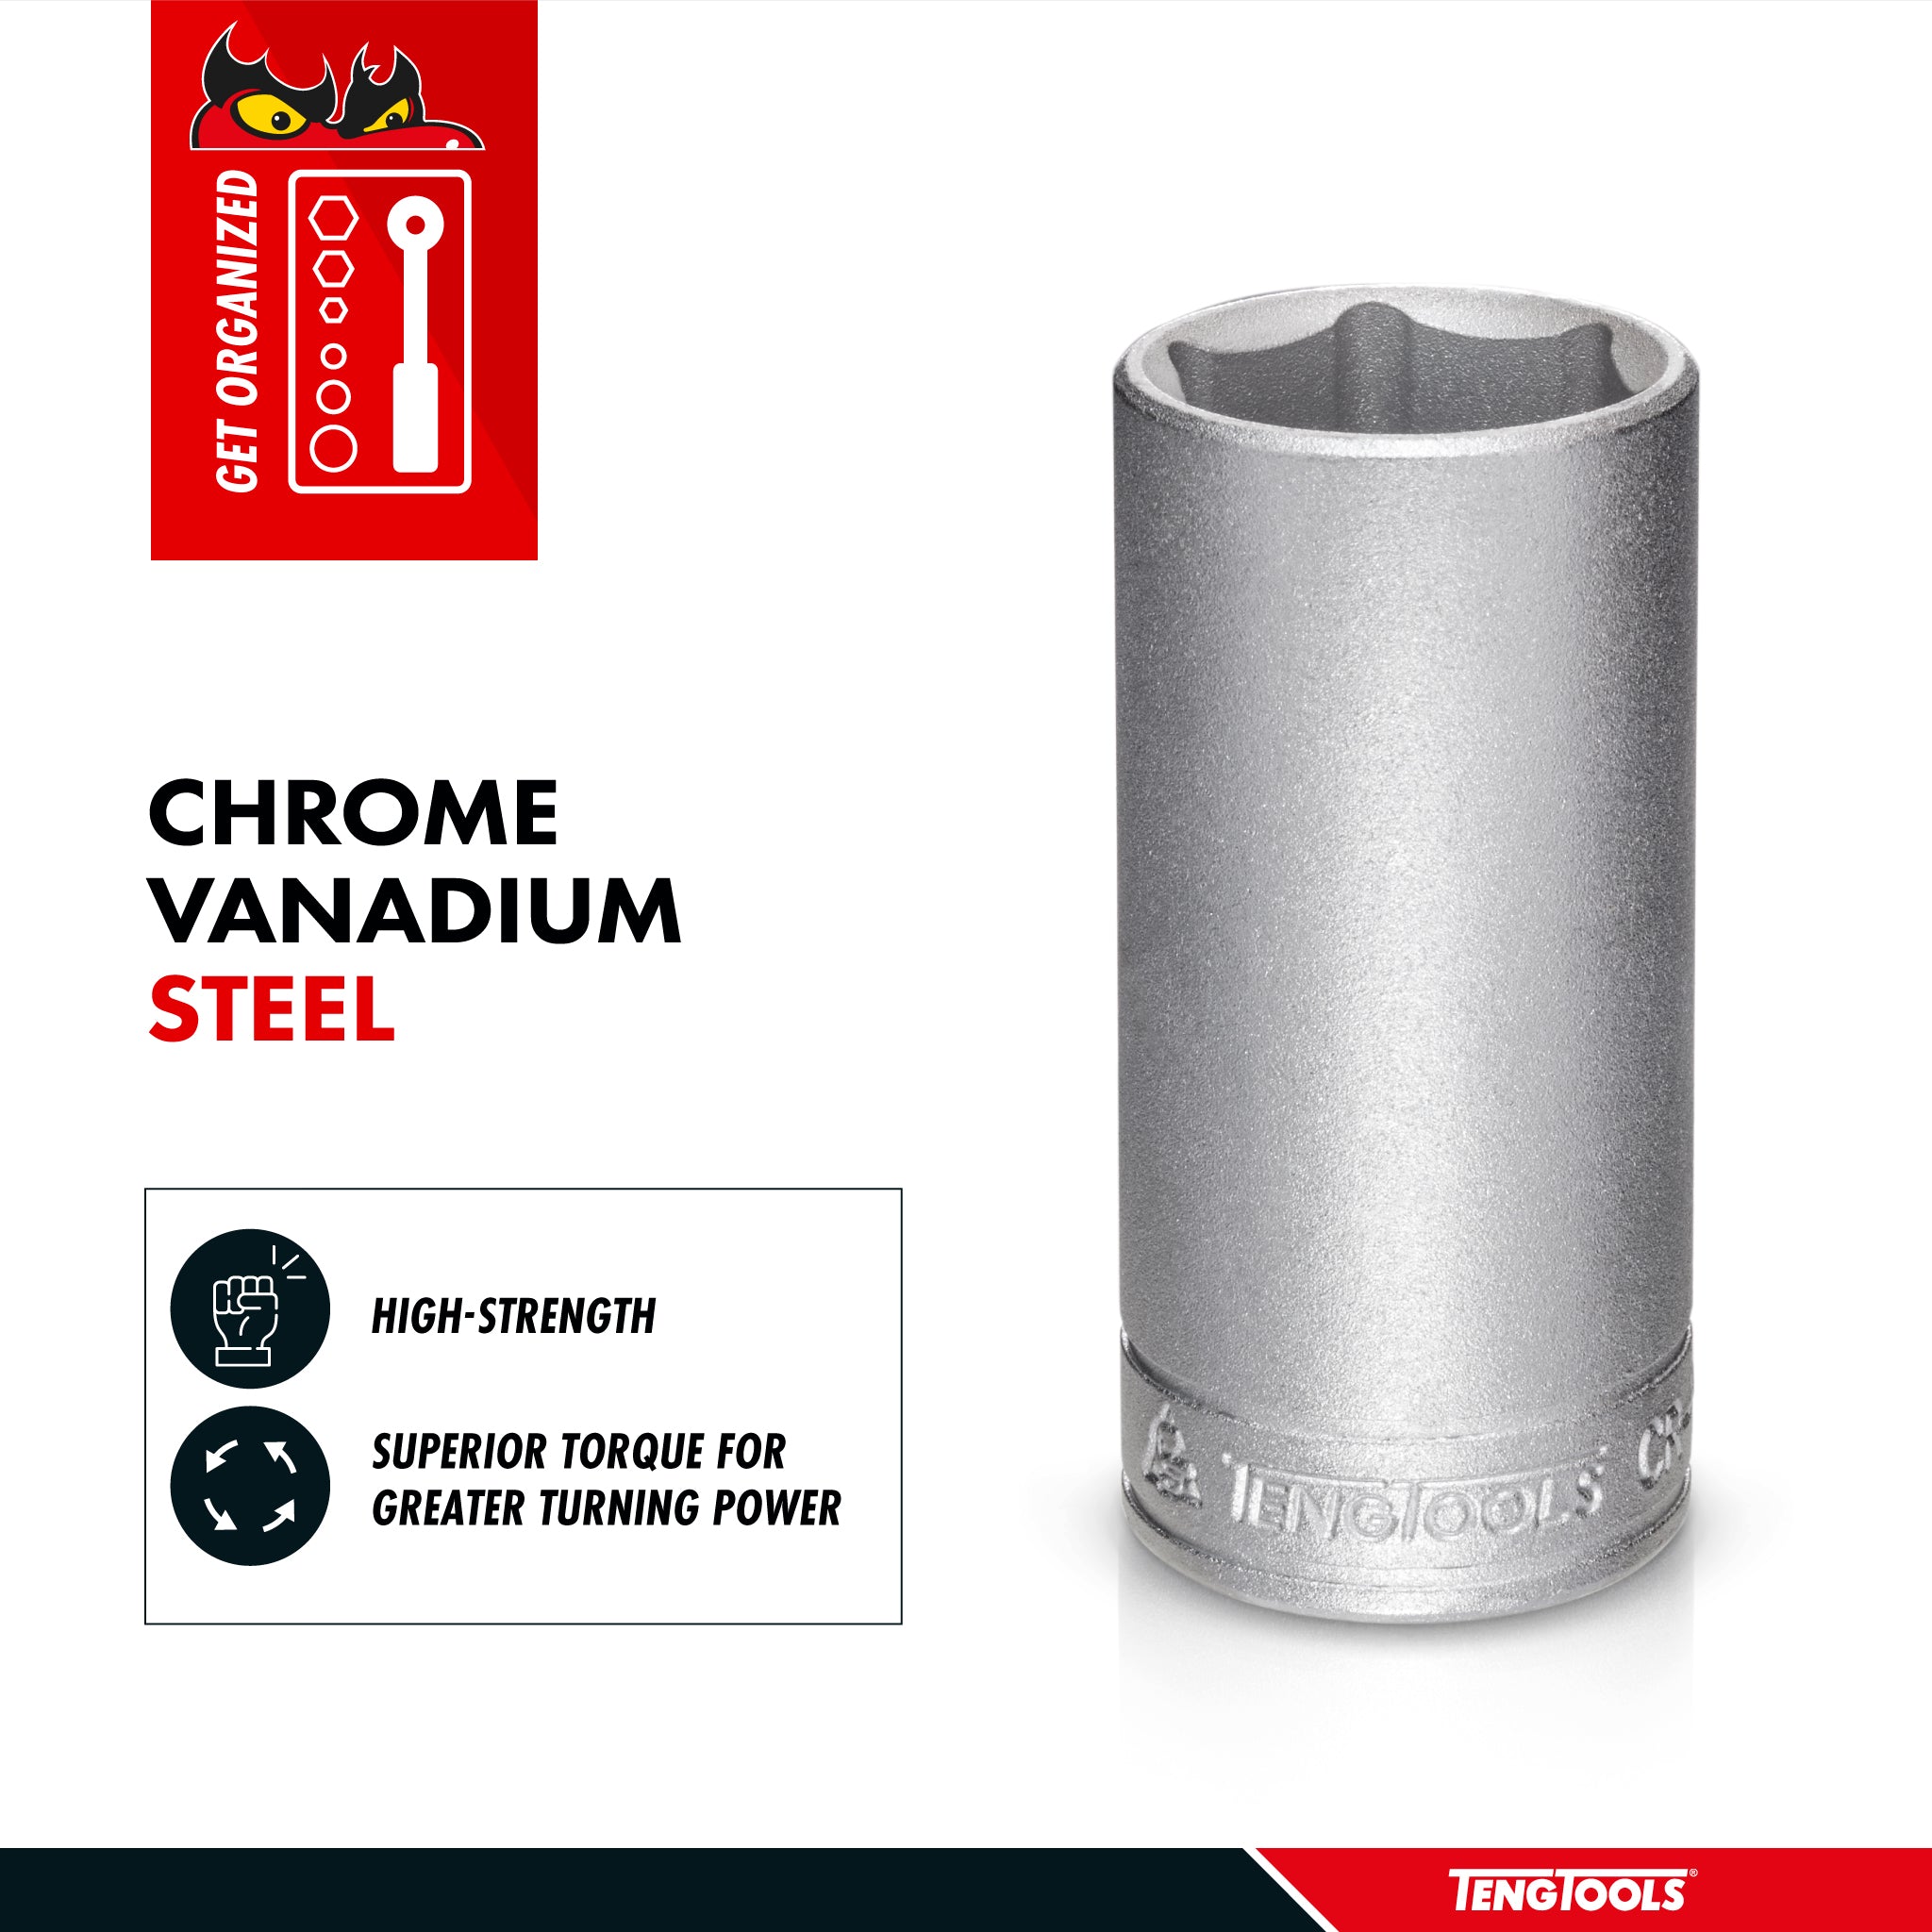 Teng Tools 3/8 Inch Drive 6 Point Metric Deep Chrome Vanadium Sockets - 11mm